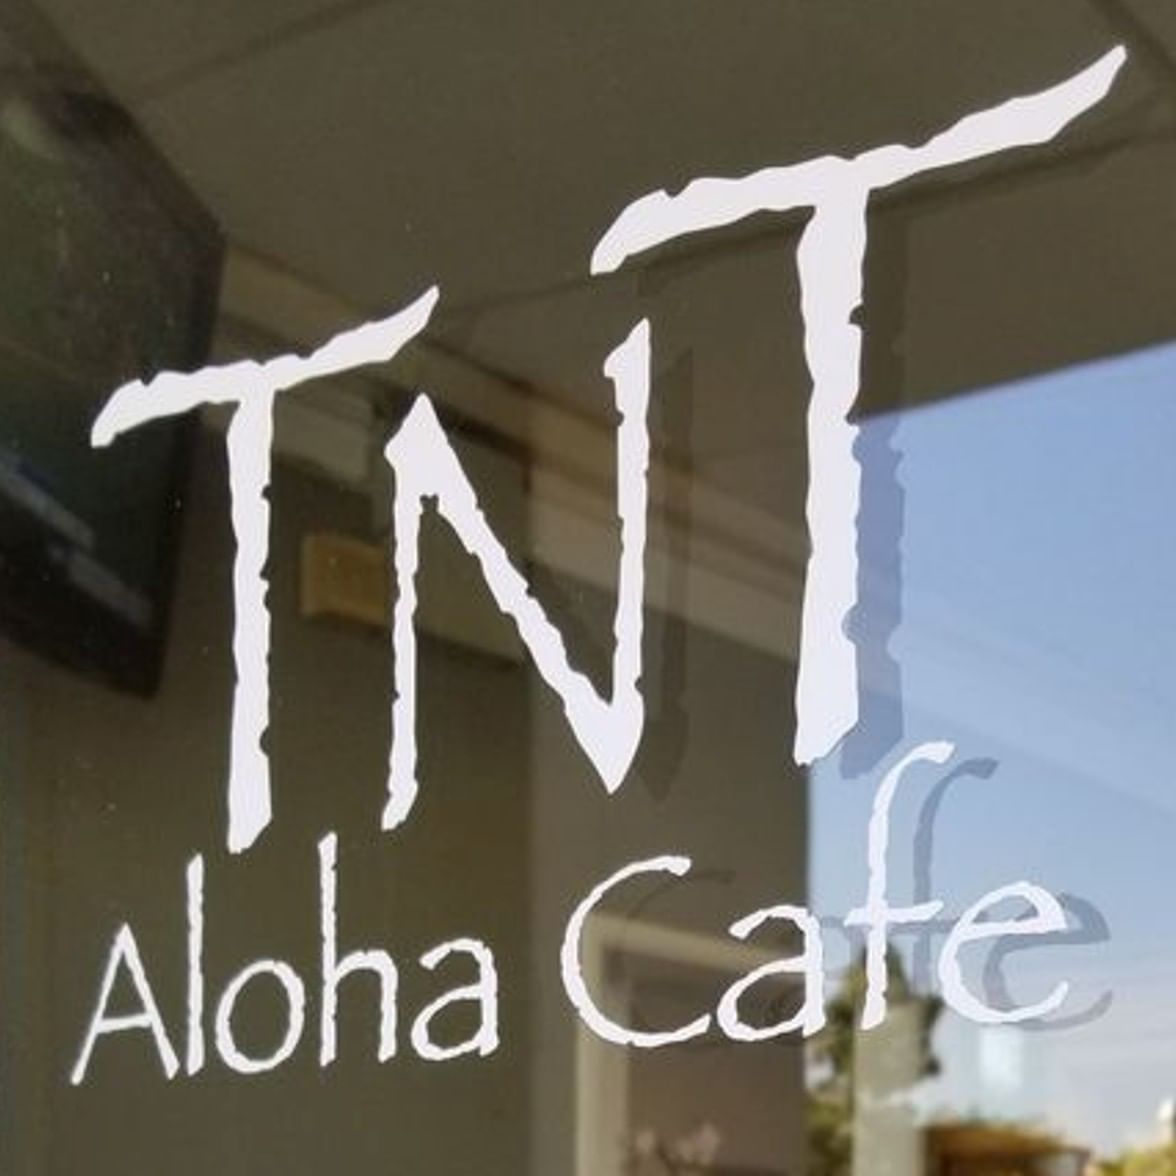 TNT Aloha Cafe: A Torrance Tradition